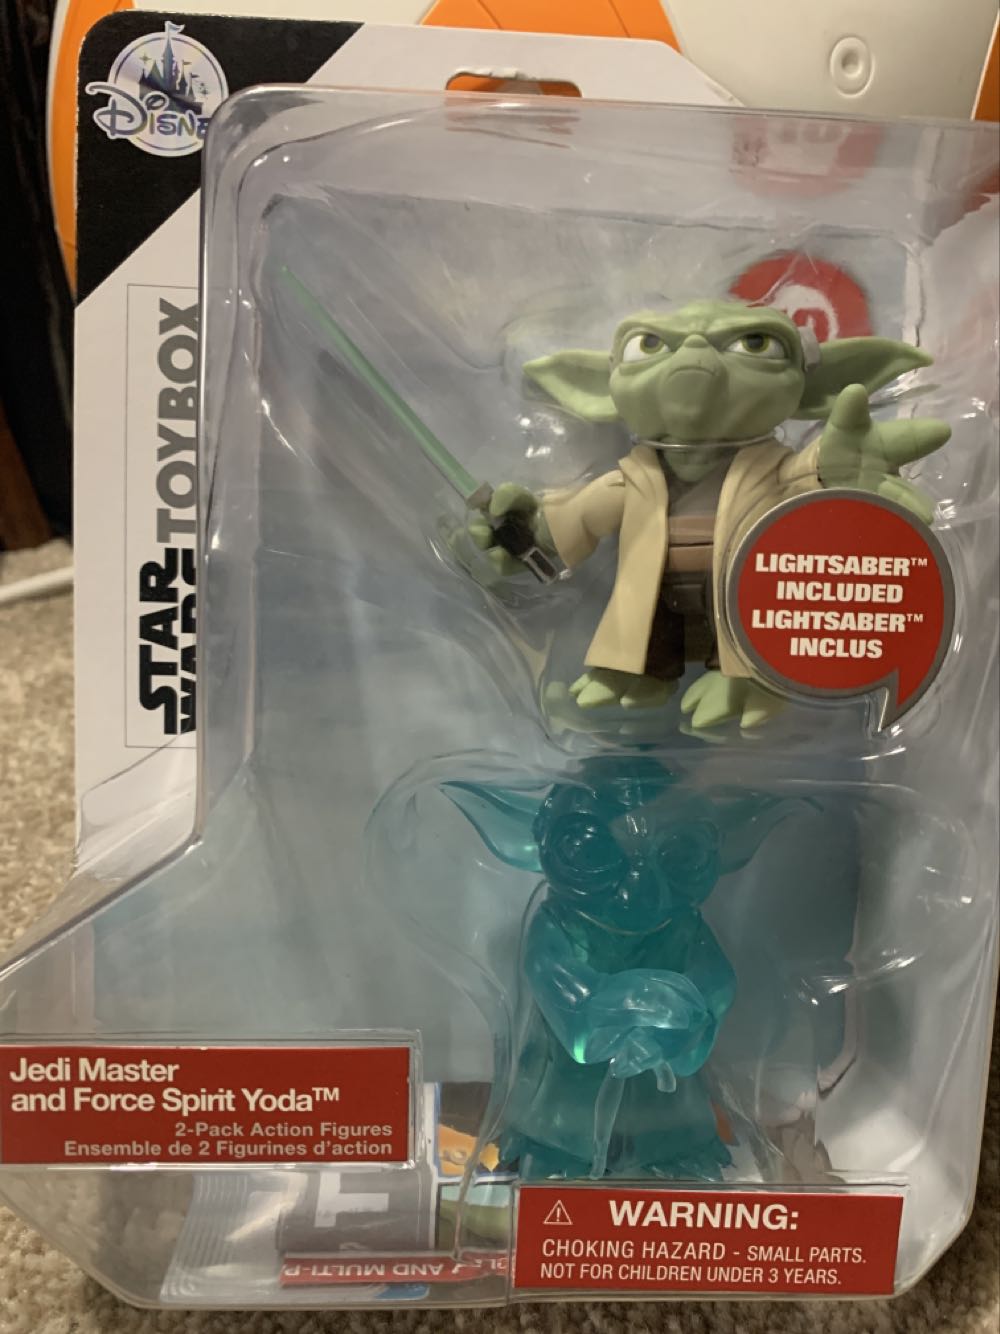 Yoda - Disney action figure collectible [Barcode 5054504840629] - Main Image 1